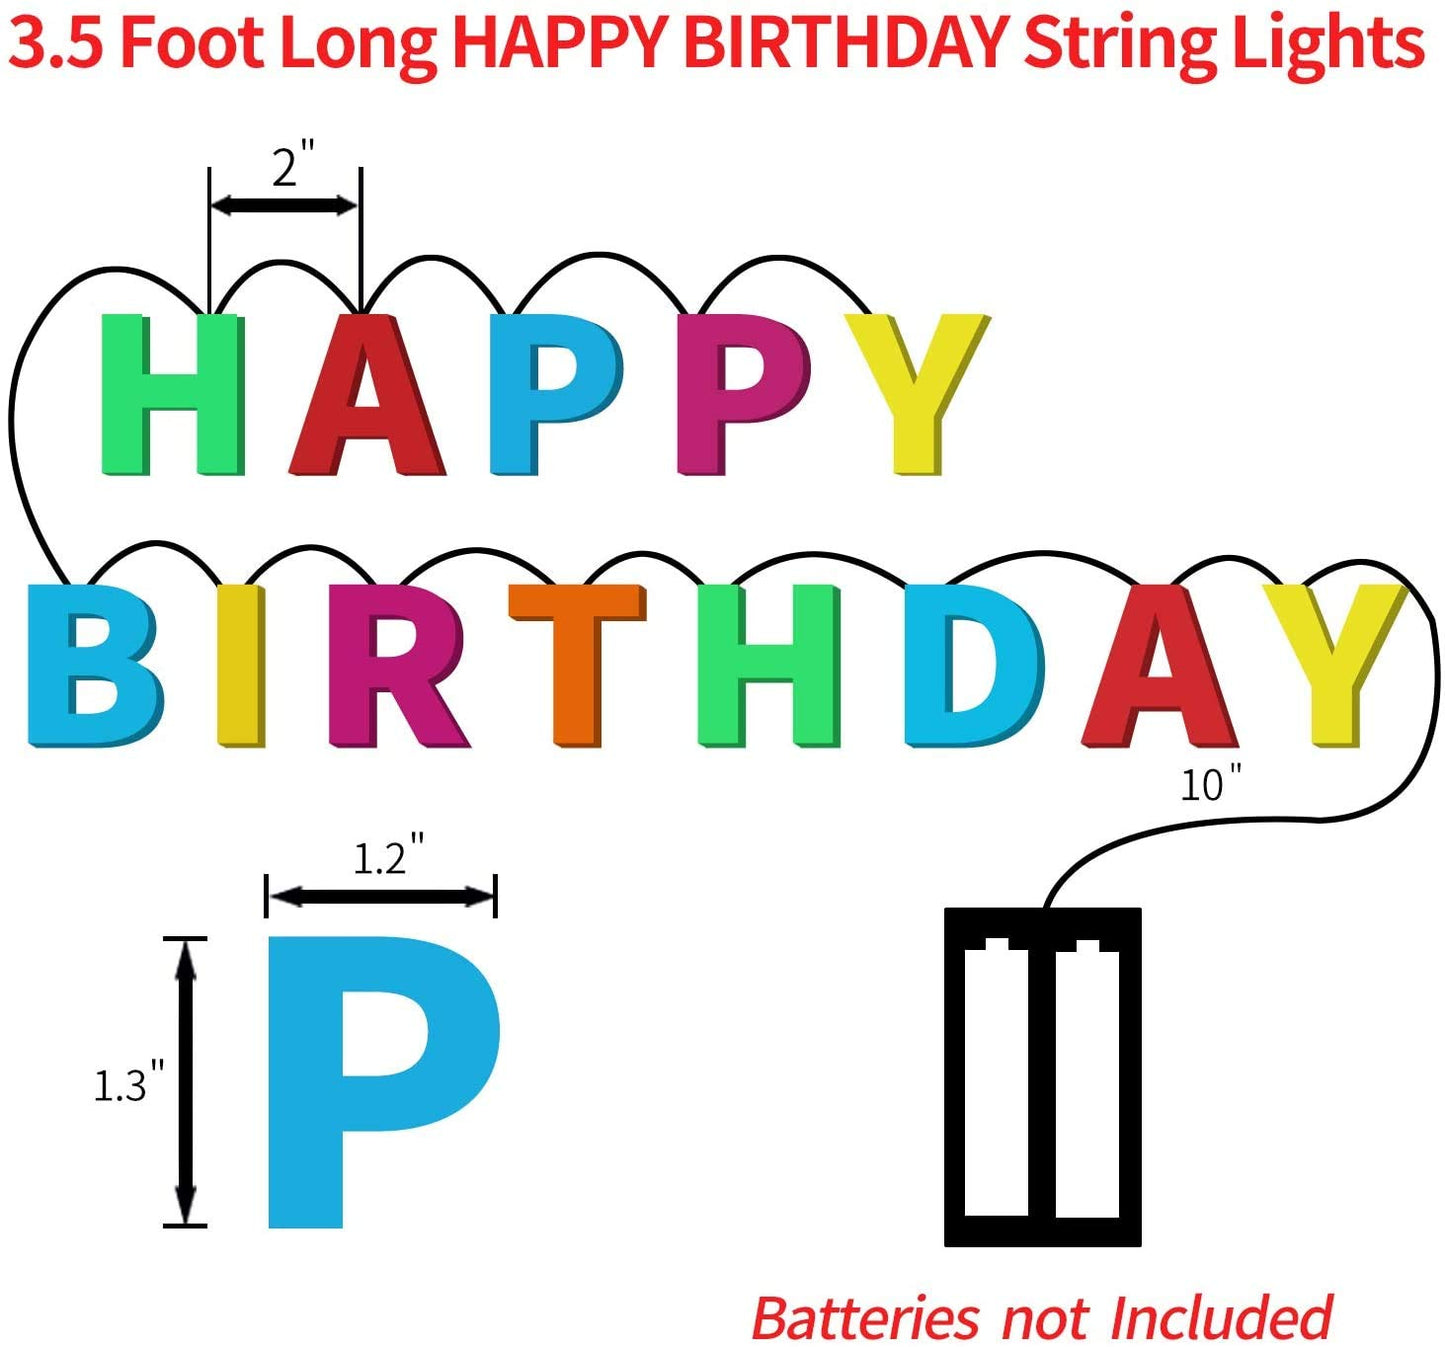 Happy Birthday String Lights (Multi, 3.5 Foot)